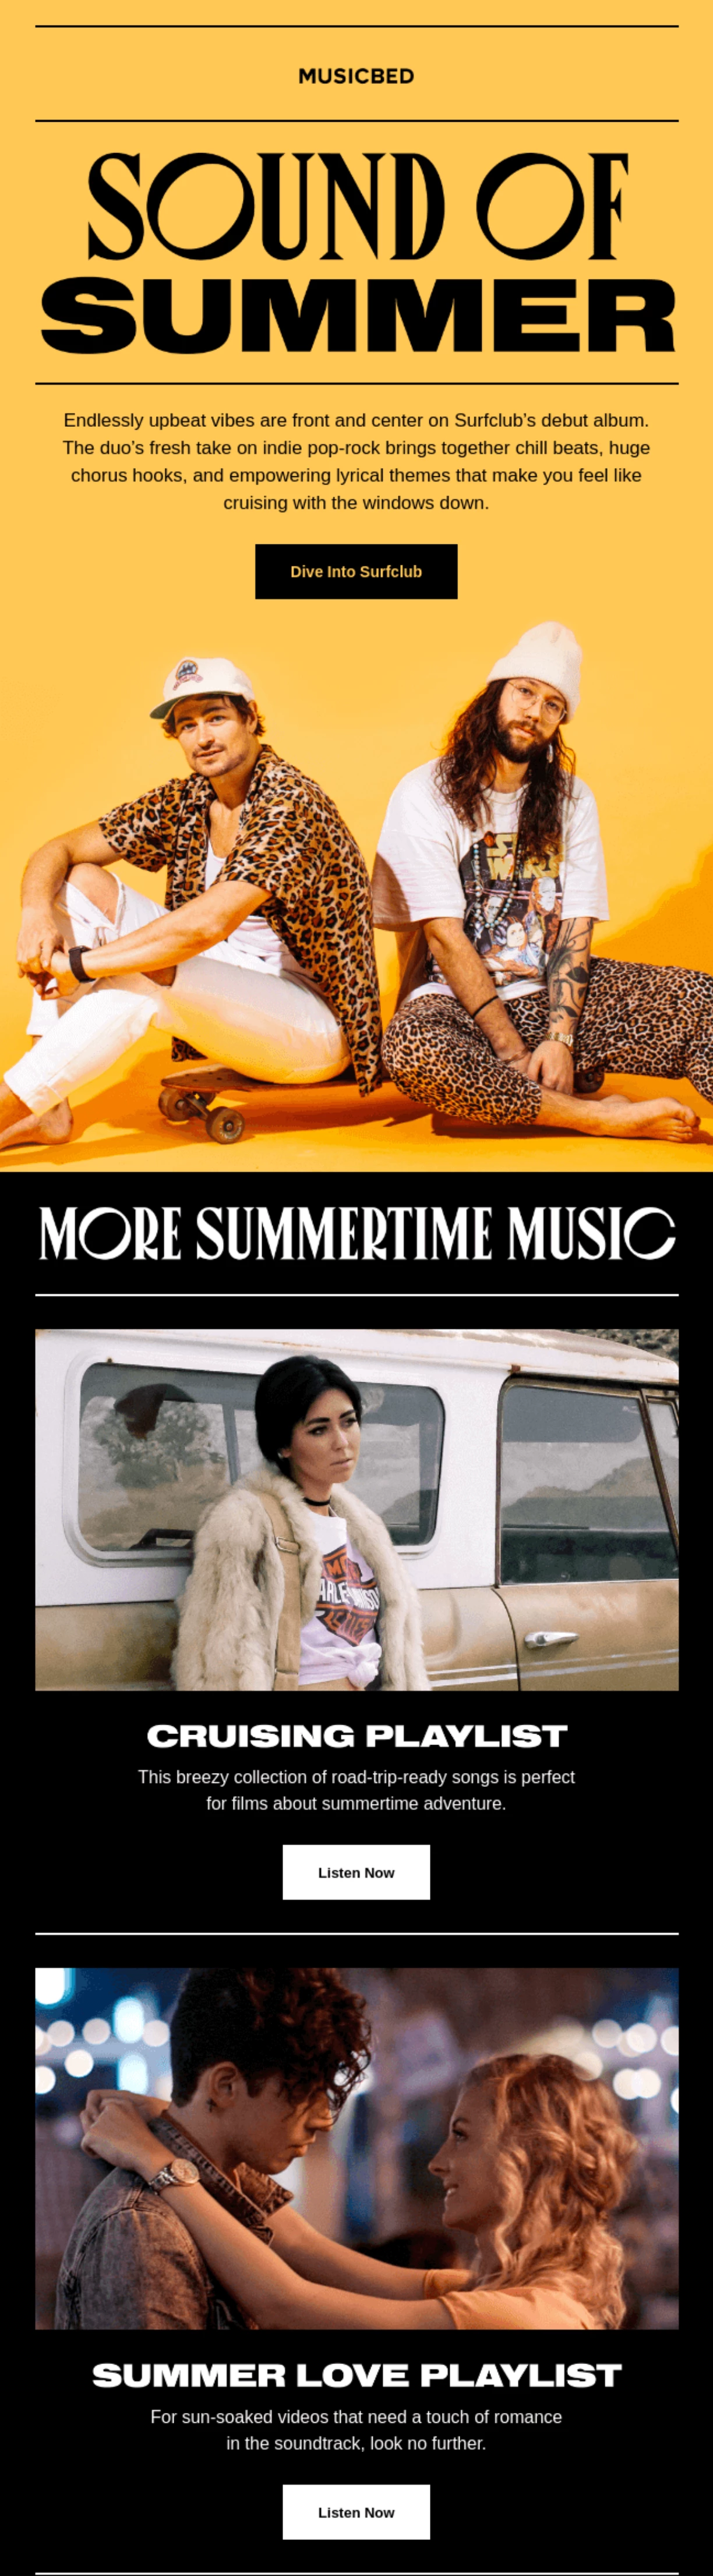 Musicbed summer newsletter example